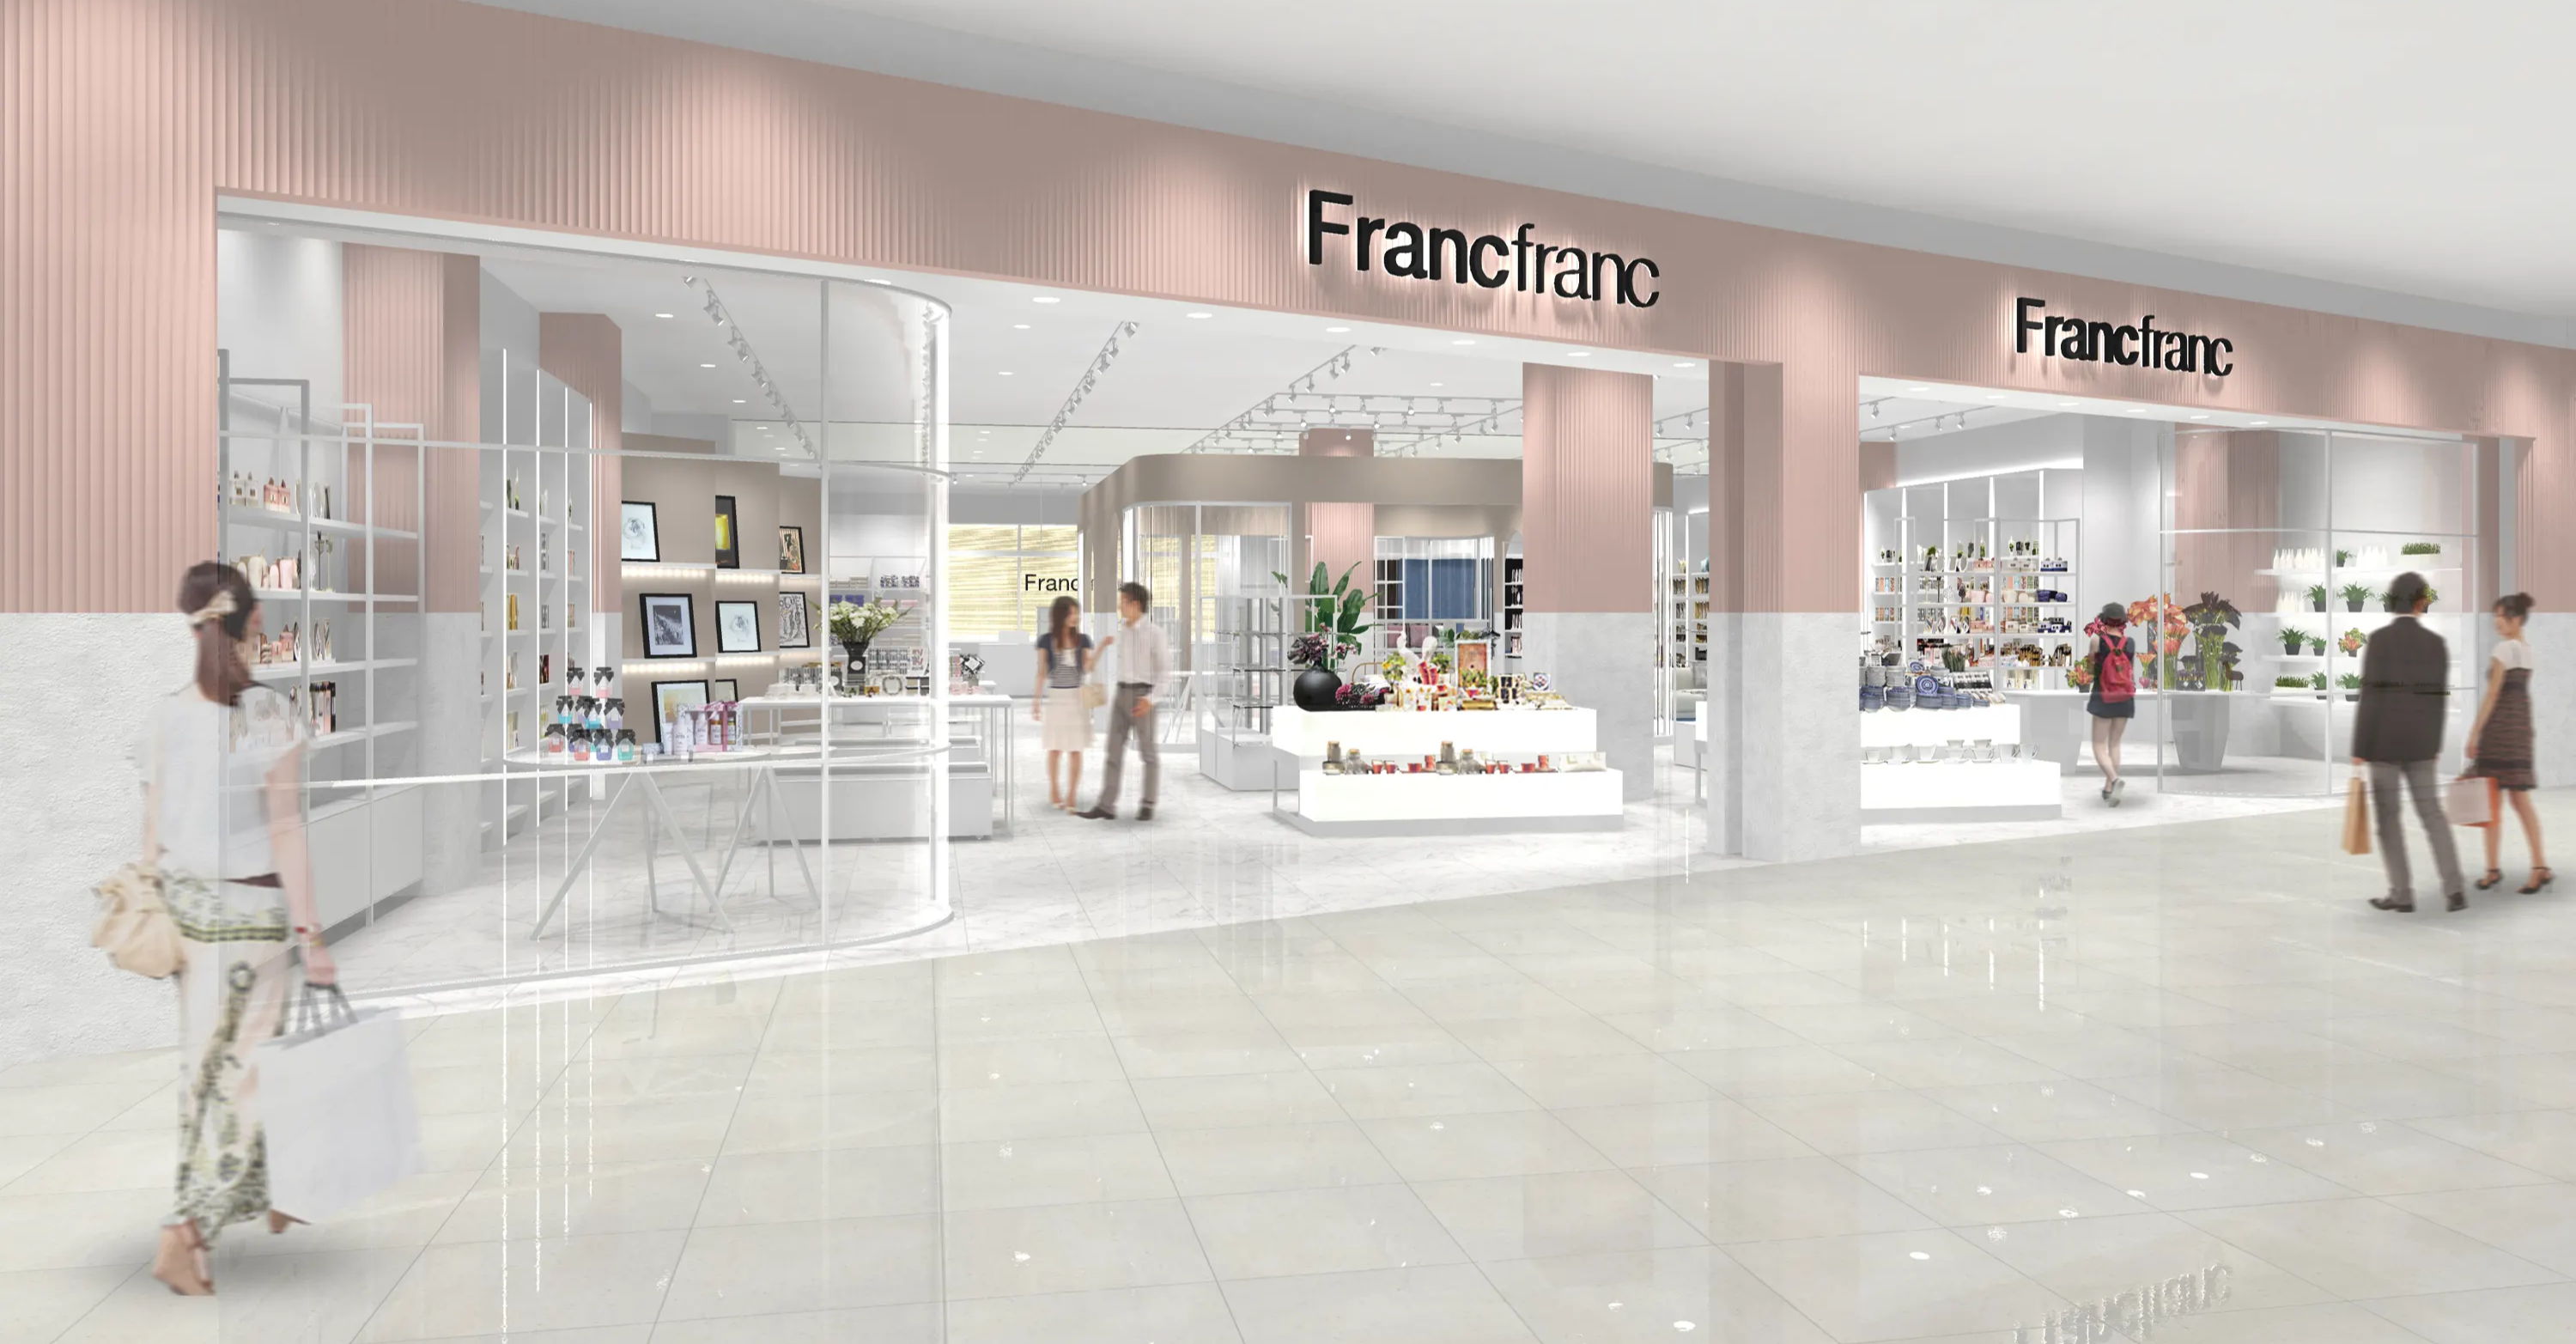 Francfranc 5 29 金 ららぽーと海老名店 ニューオープン Francfranc フランフラン 公式通販 家具 インテリア 生活雑貨